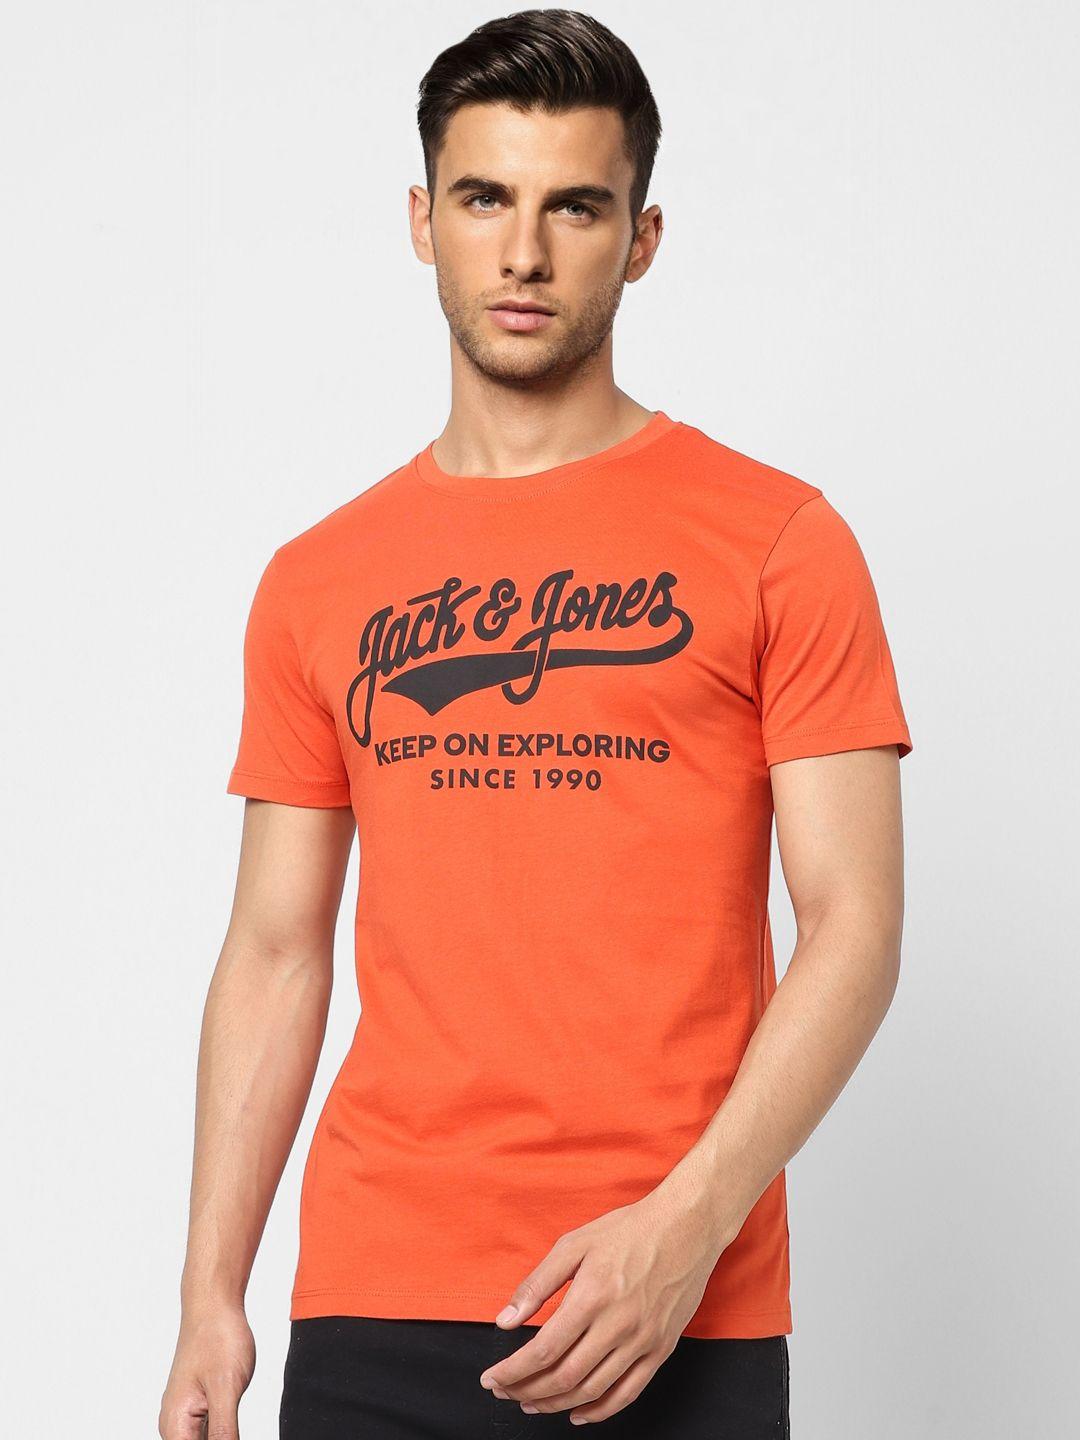 jack & jones men red brand logo printed pure cotton slim fit t-shirt